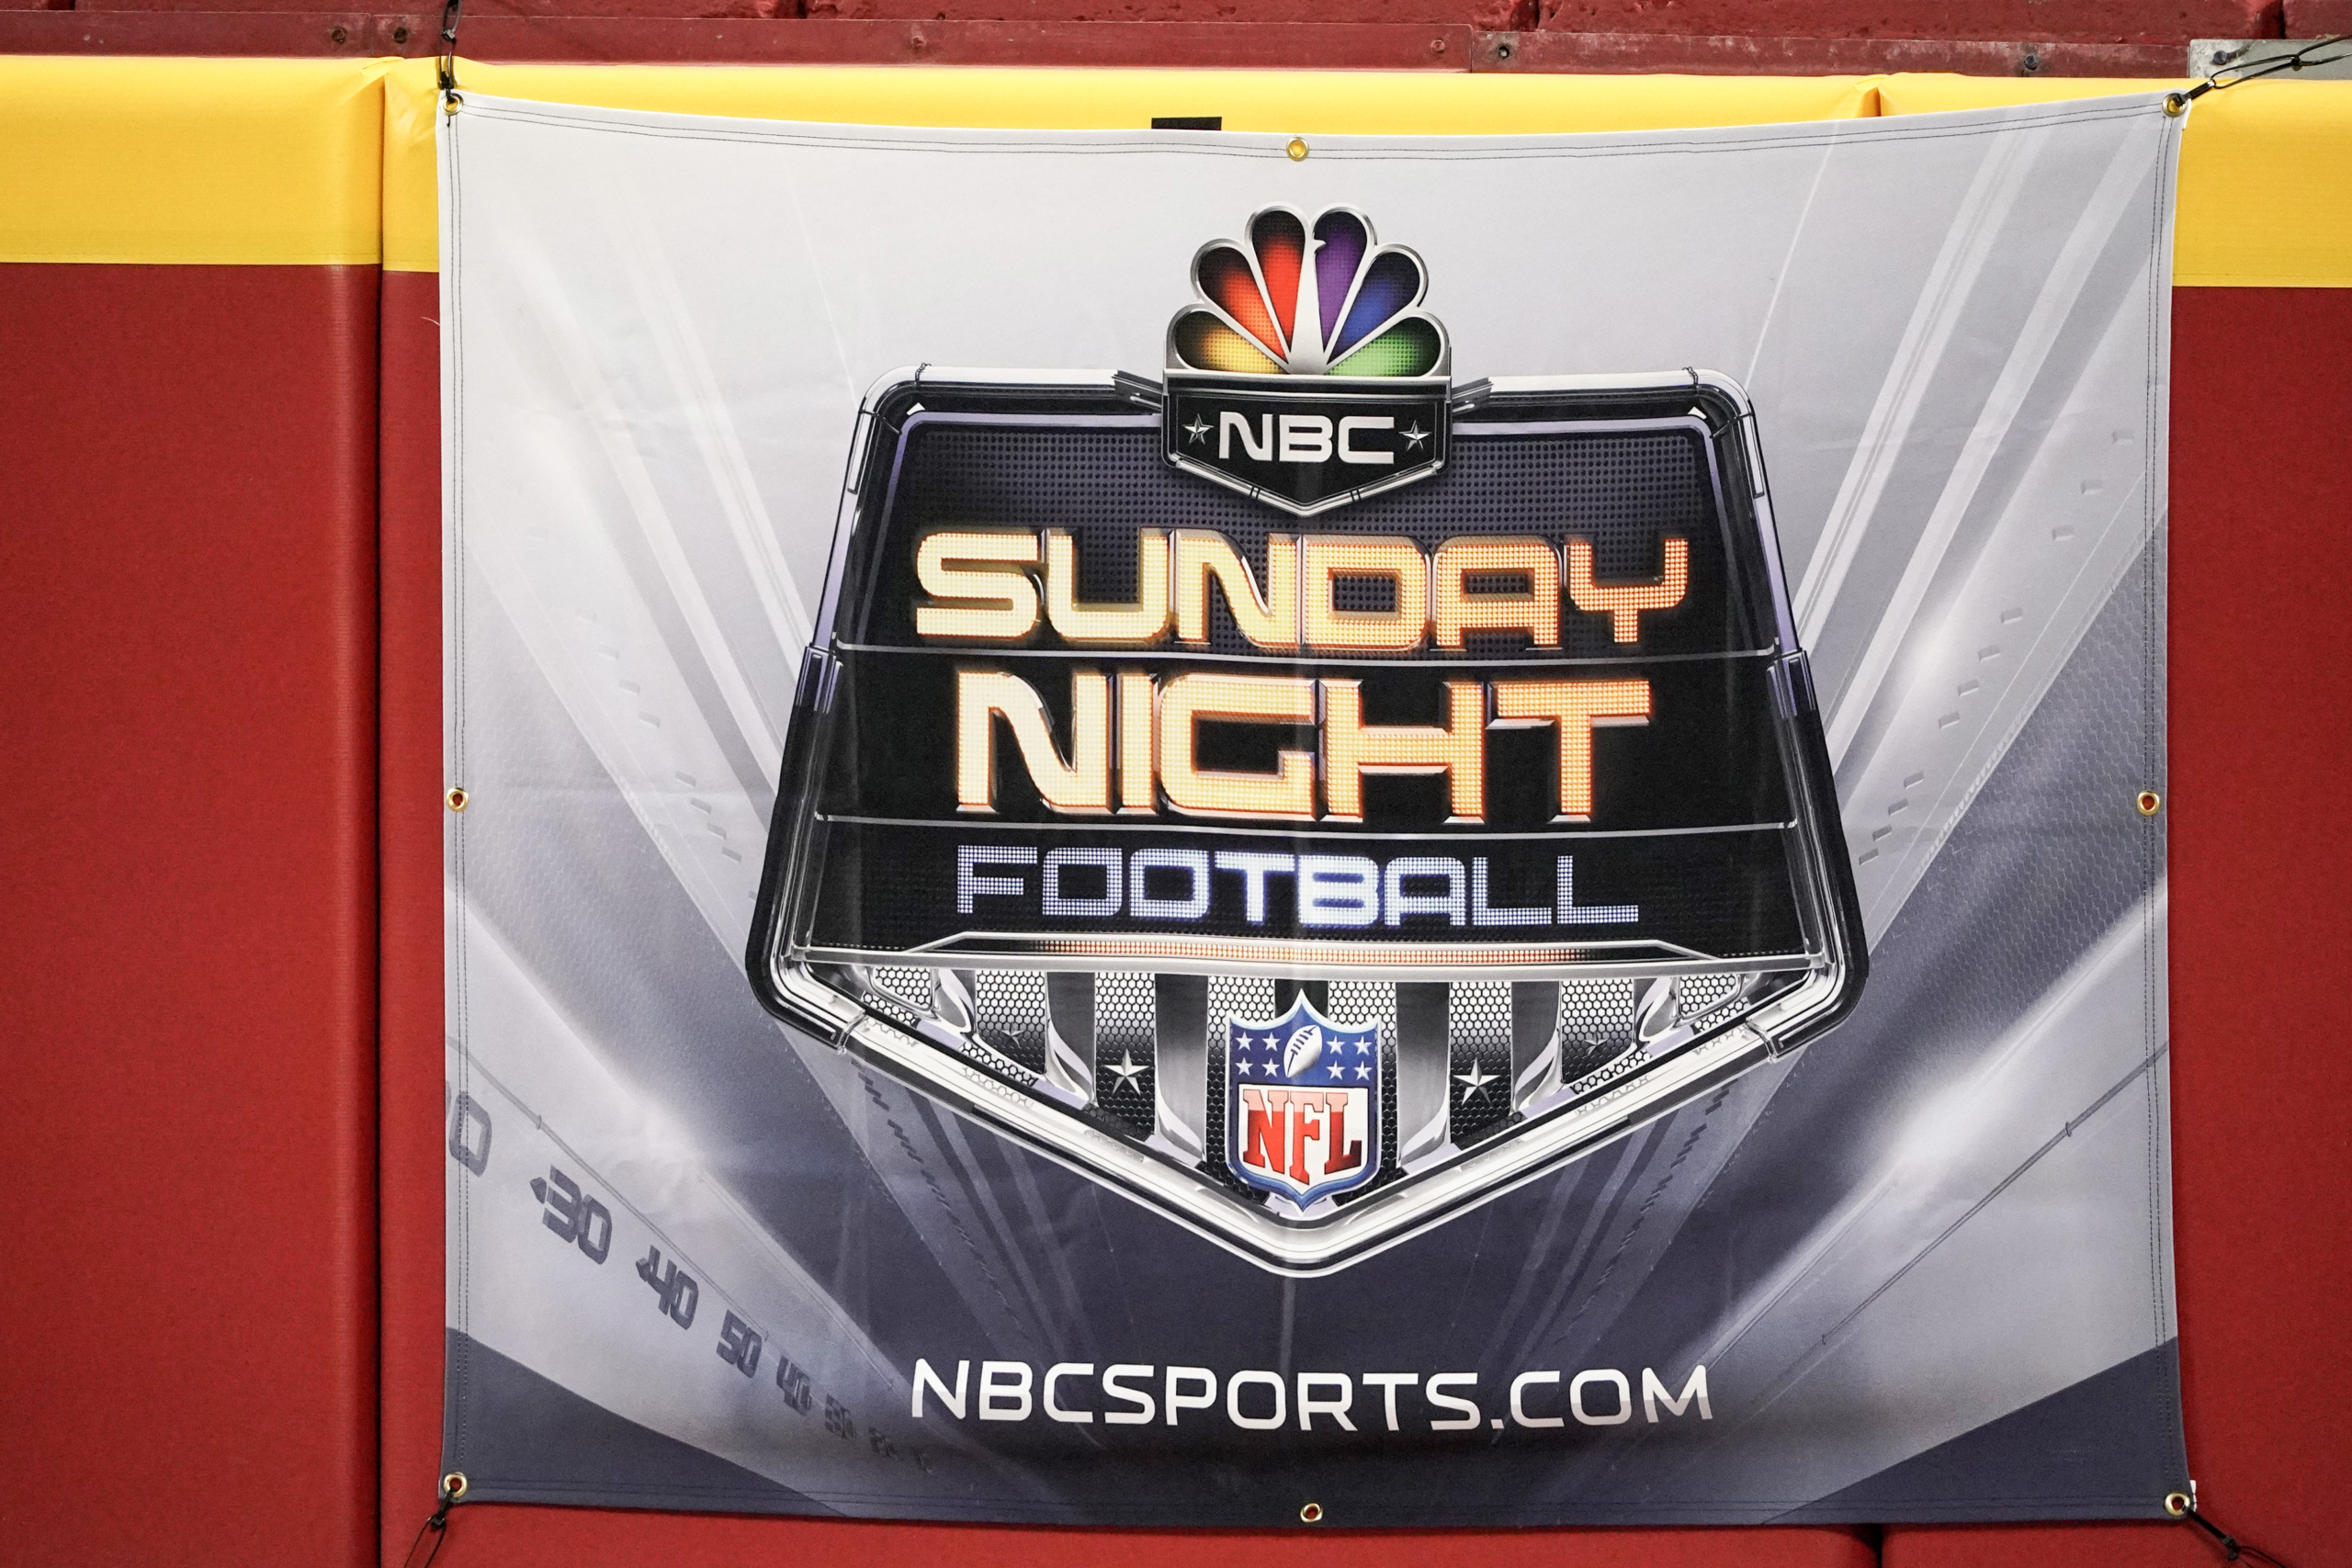 How to watch NBC's Sunday Night Football